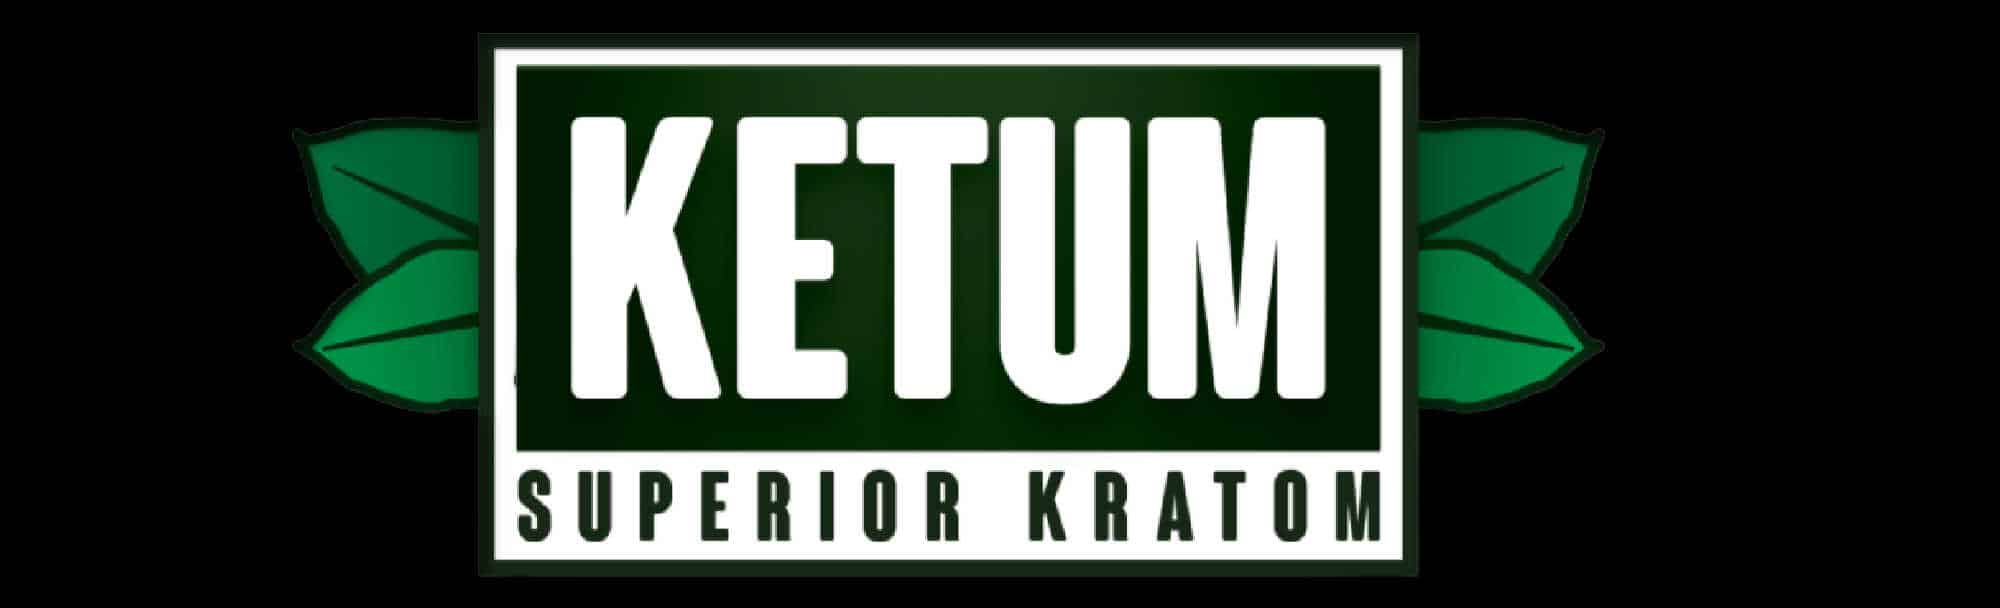 image of ketum superior kratom logo